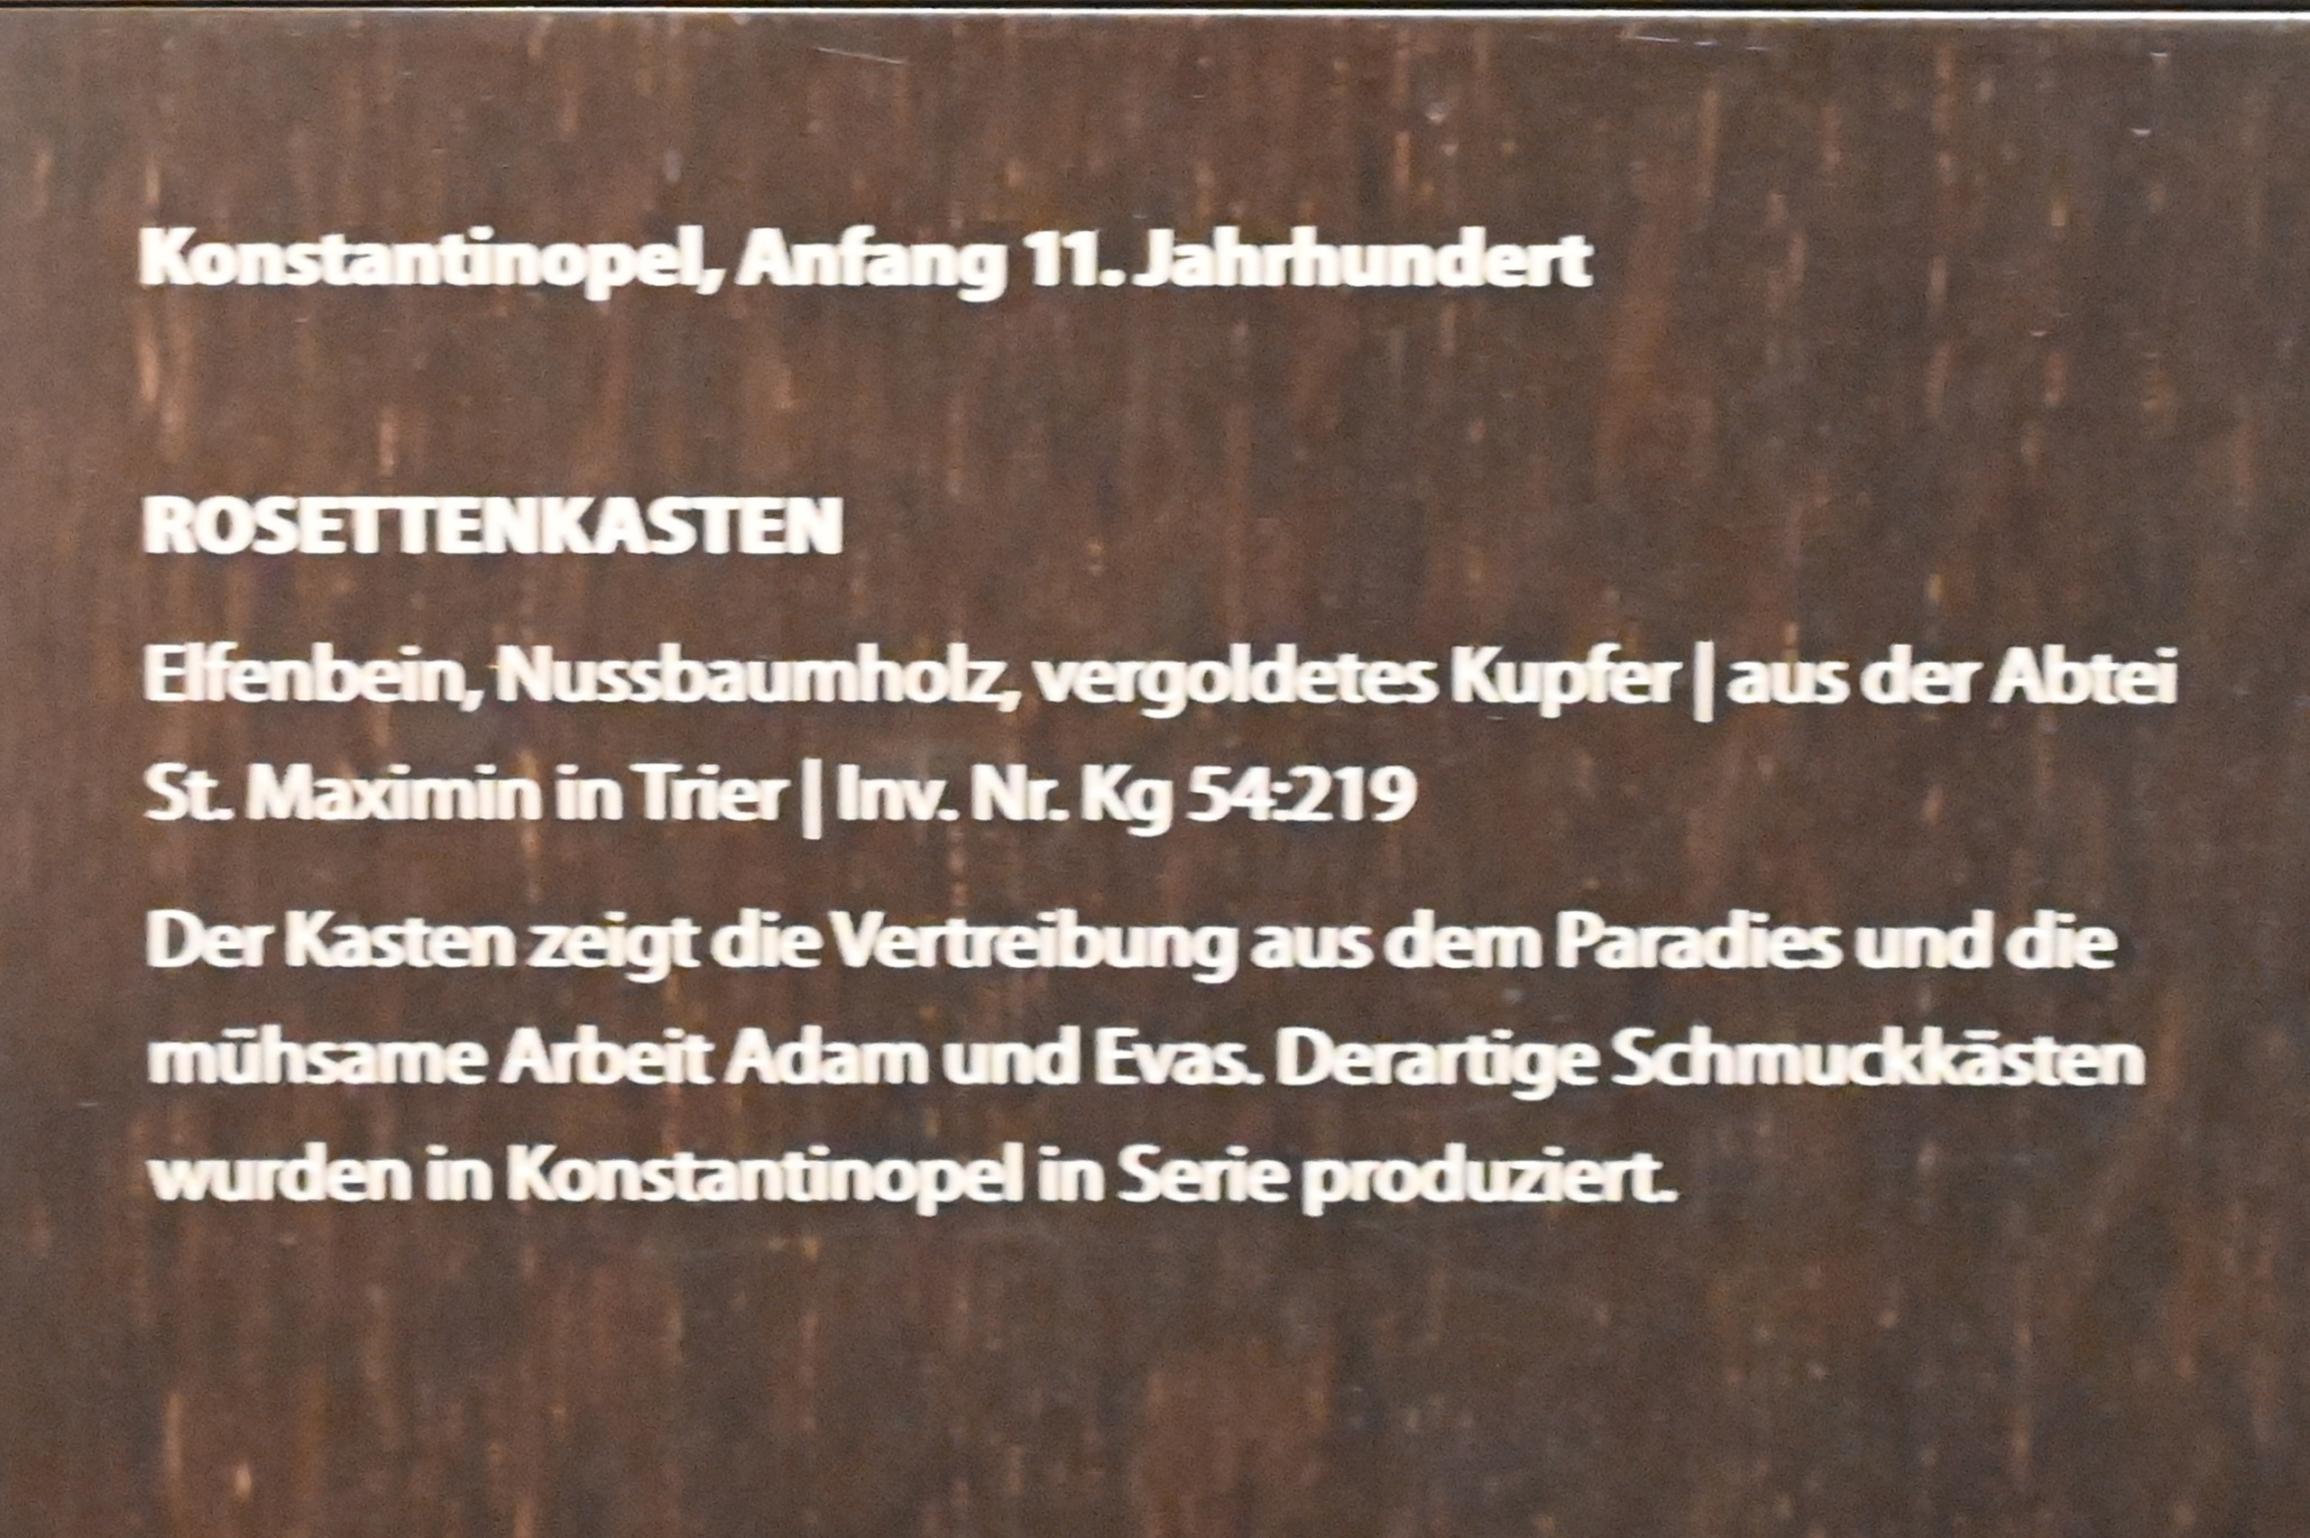 Rosettenkasten, Trier, ehem. Reichsabtei St. Maximin, jetzt Darmstadt, Hessisches Landesmuseum, Kunsthandwerk, Beginn 11. Jhd., Bild 3/3